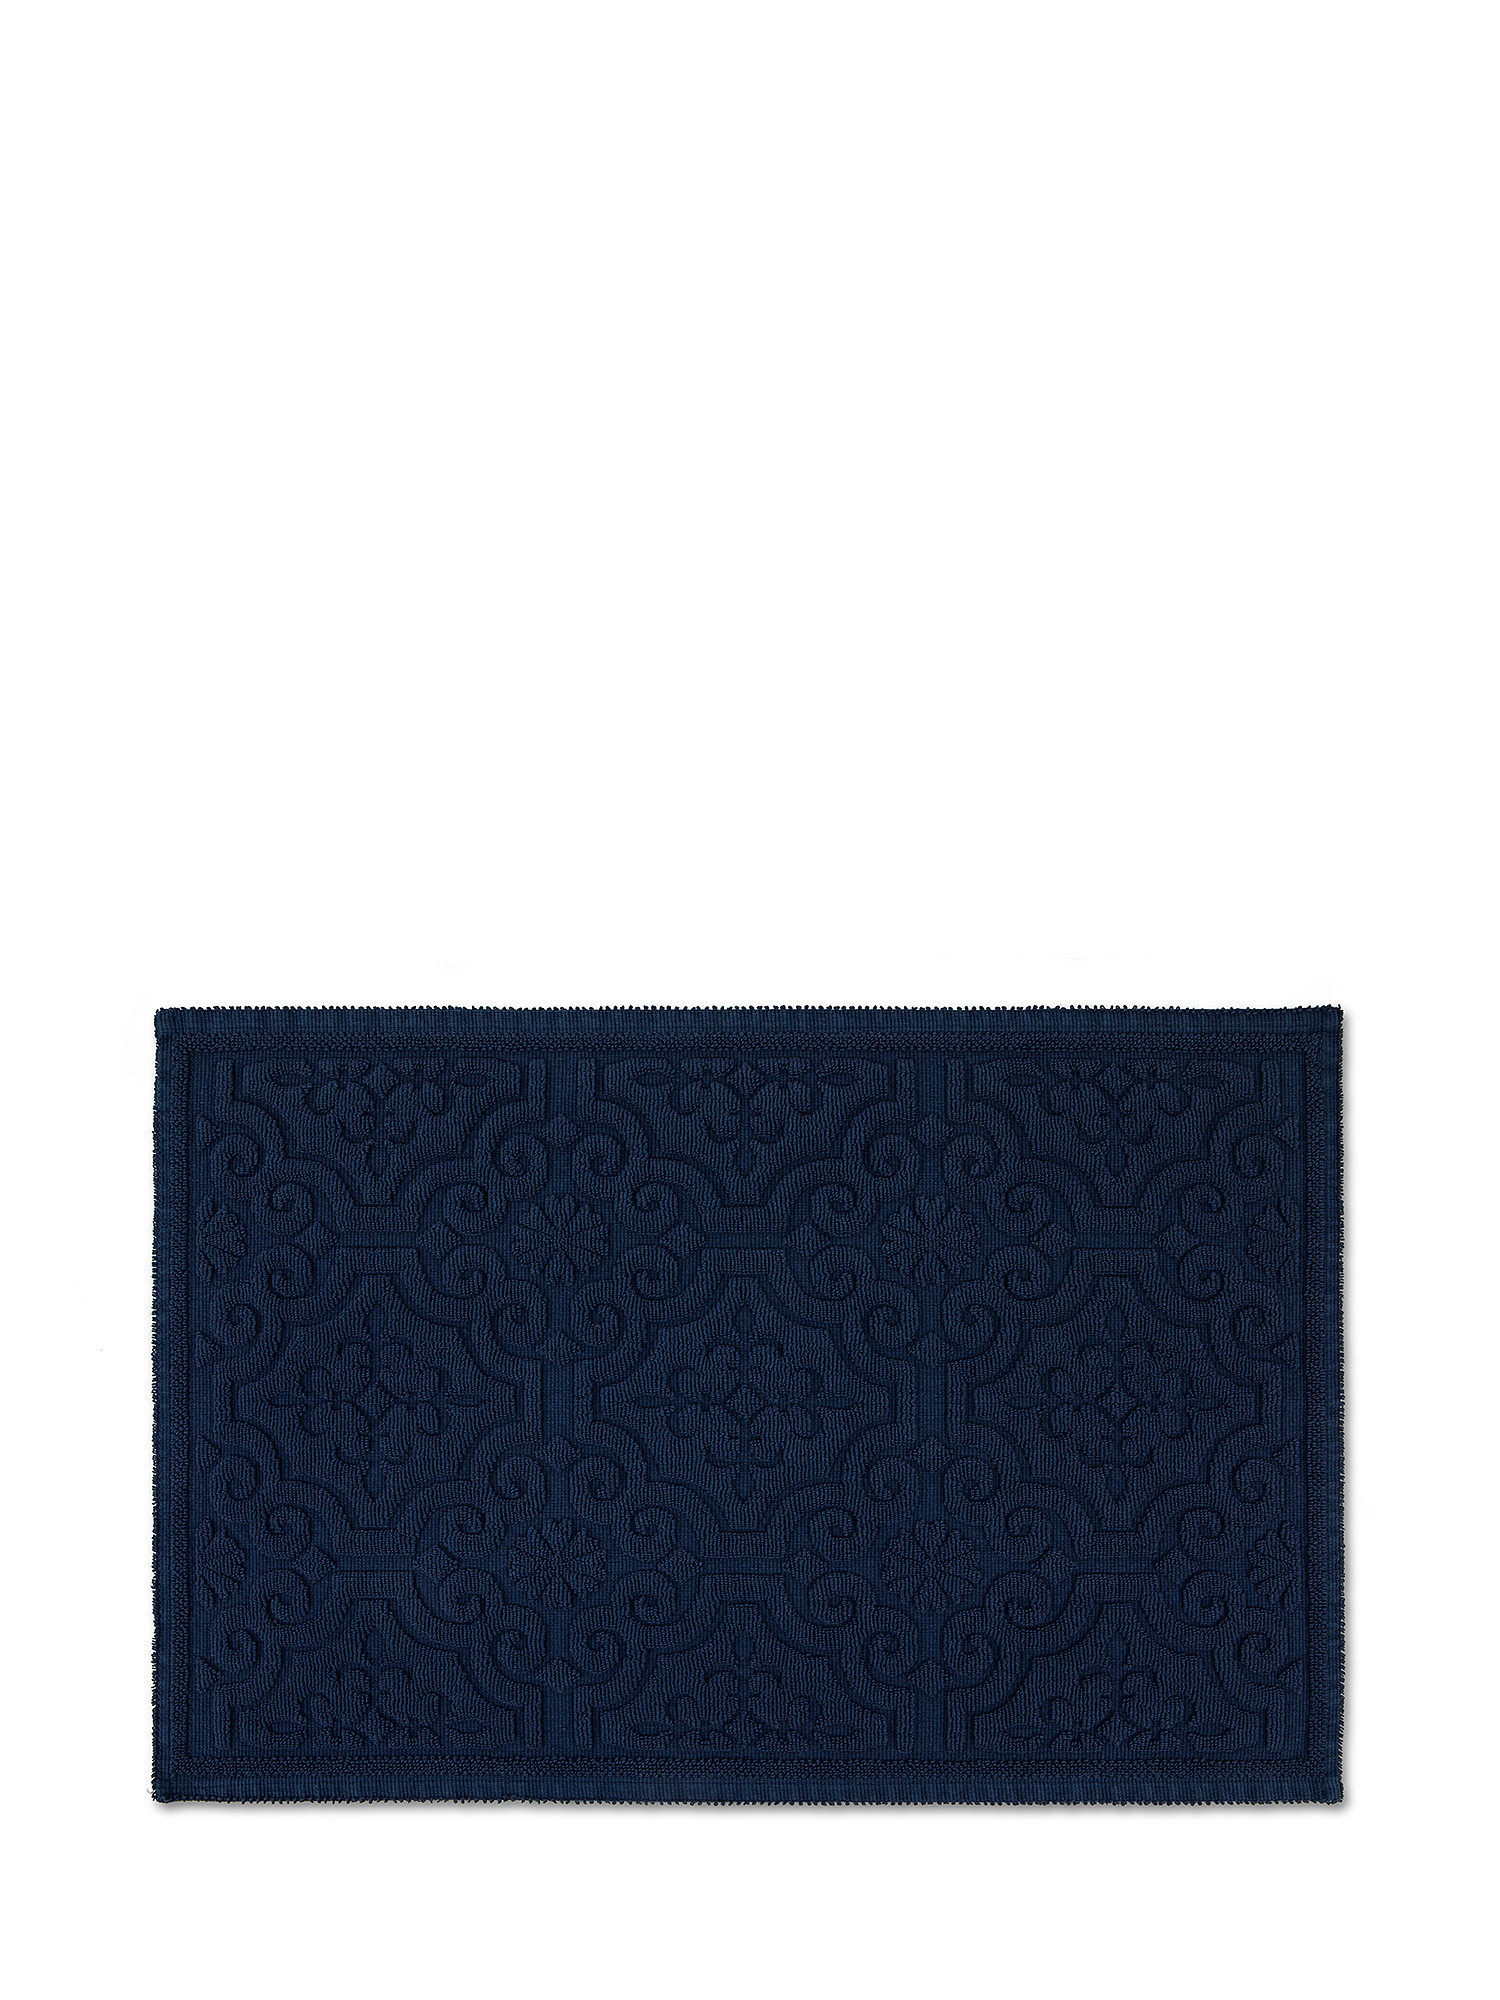 Zefiro solid color cotton shower mat, Dark Blue, large image number 0